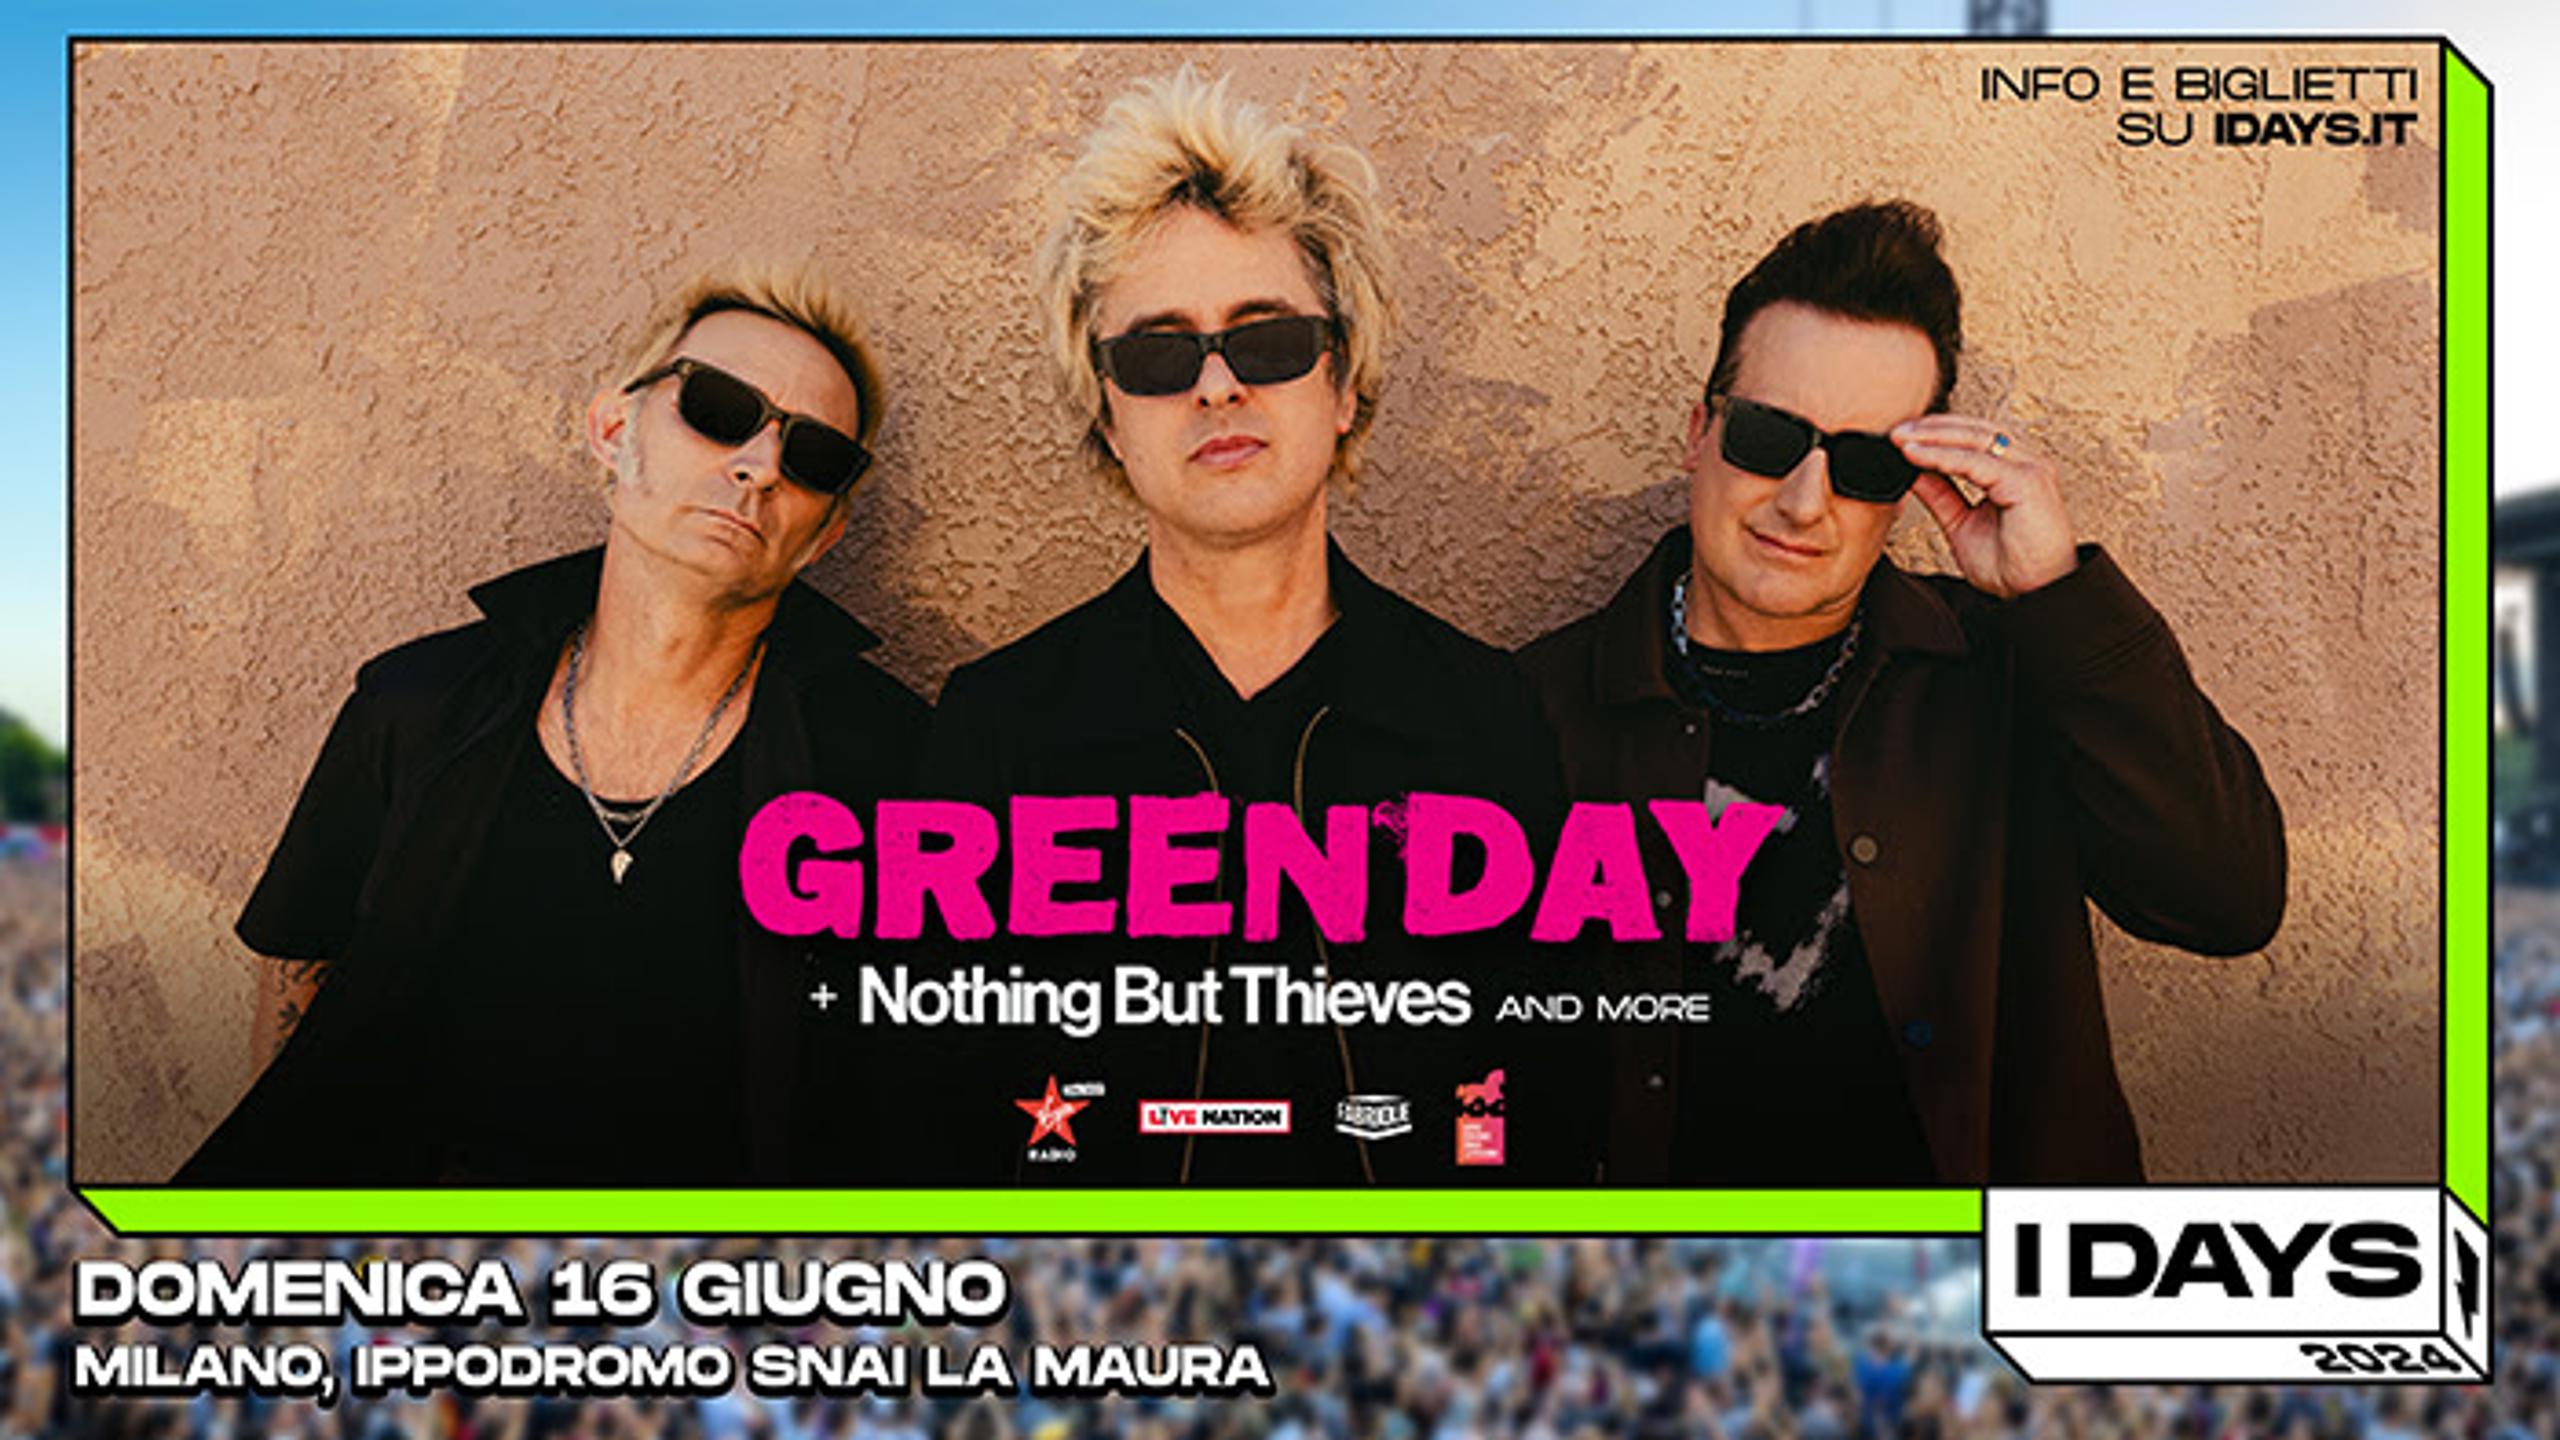 Green Day at Ippodromo Snai San Siro Tickets